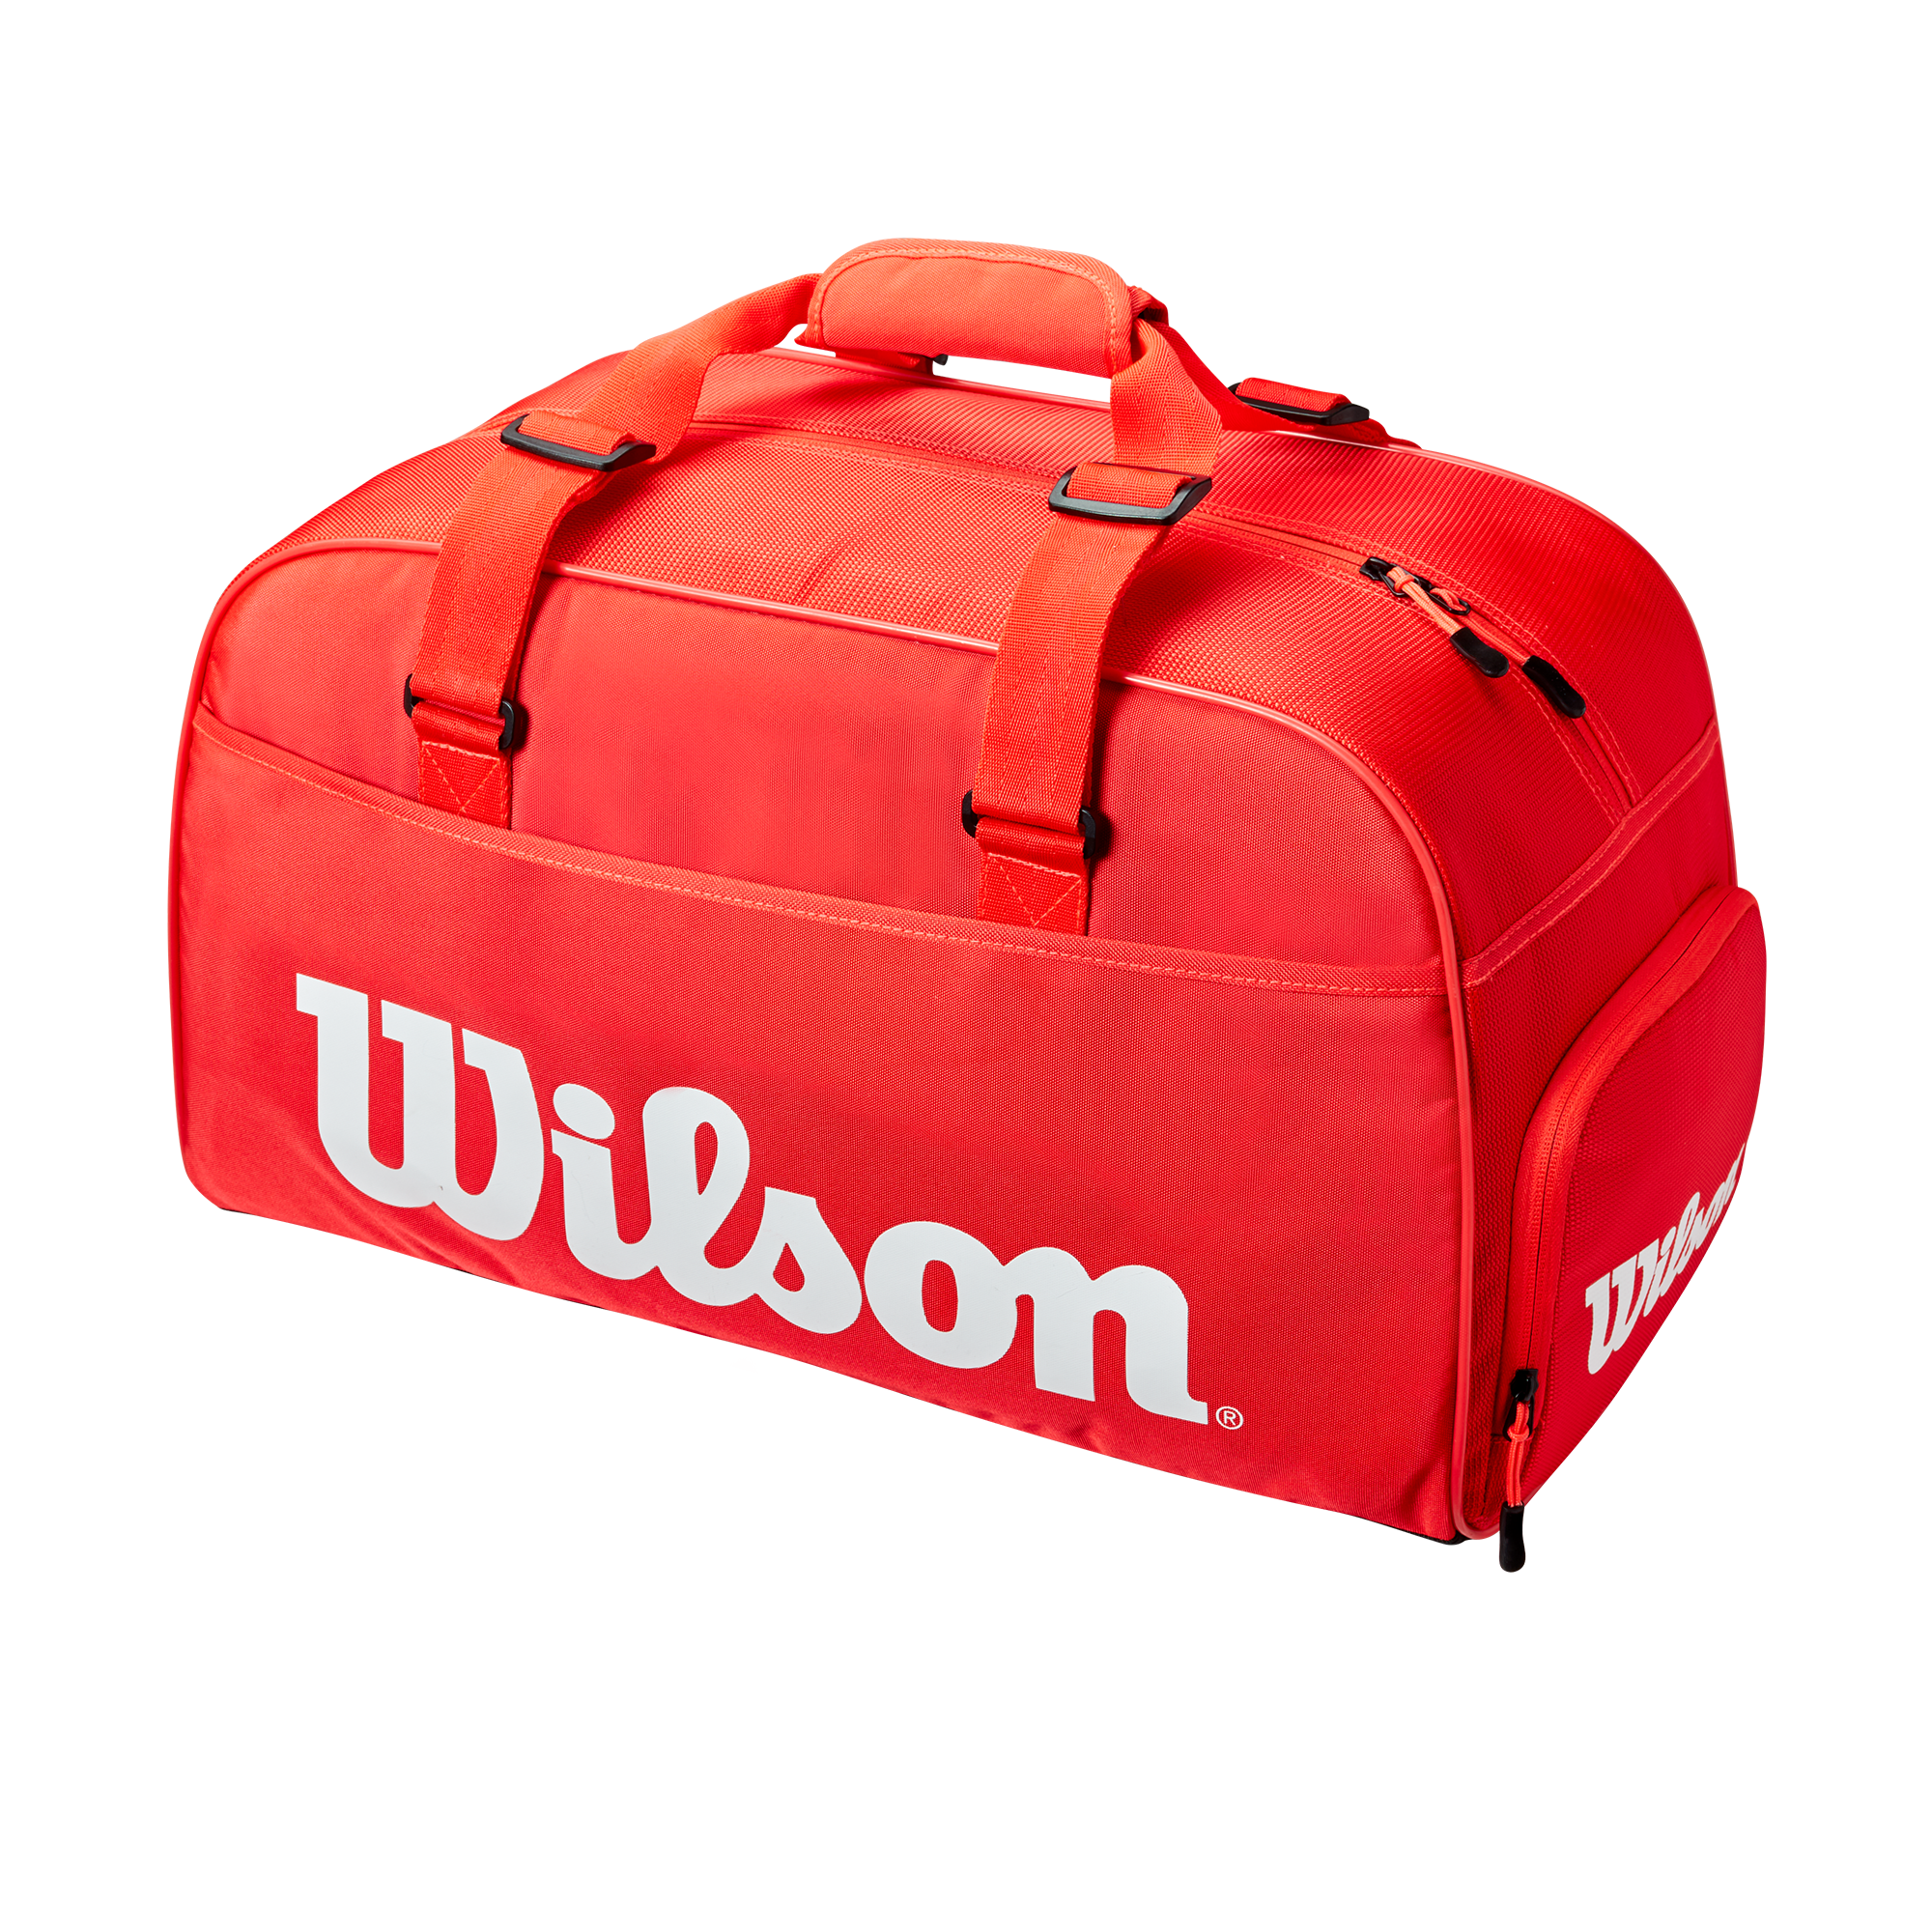 Wilson Super Tour Small Duffle Bag